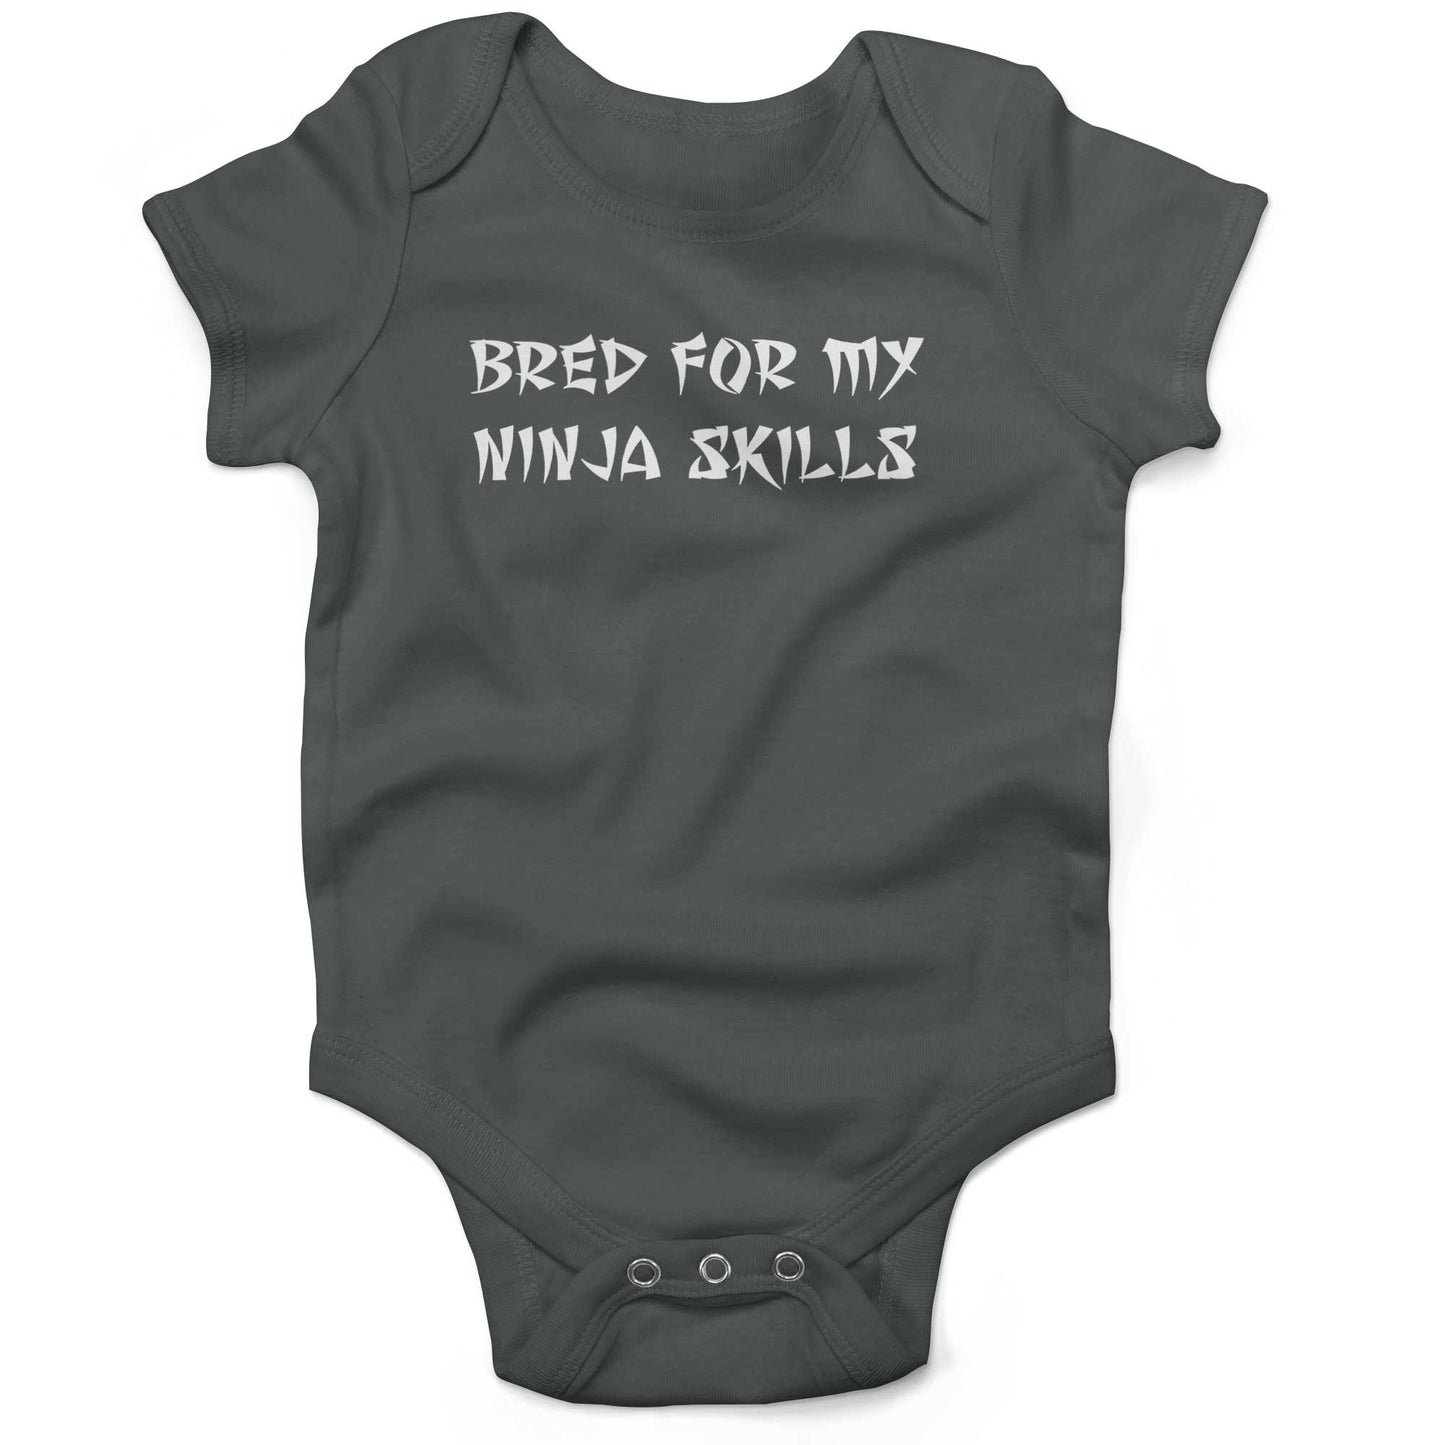 Bred For My Ninja Skills Infant Bodysuit or Raglan Baby Tee-Organic Asphalt-3-6 months